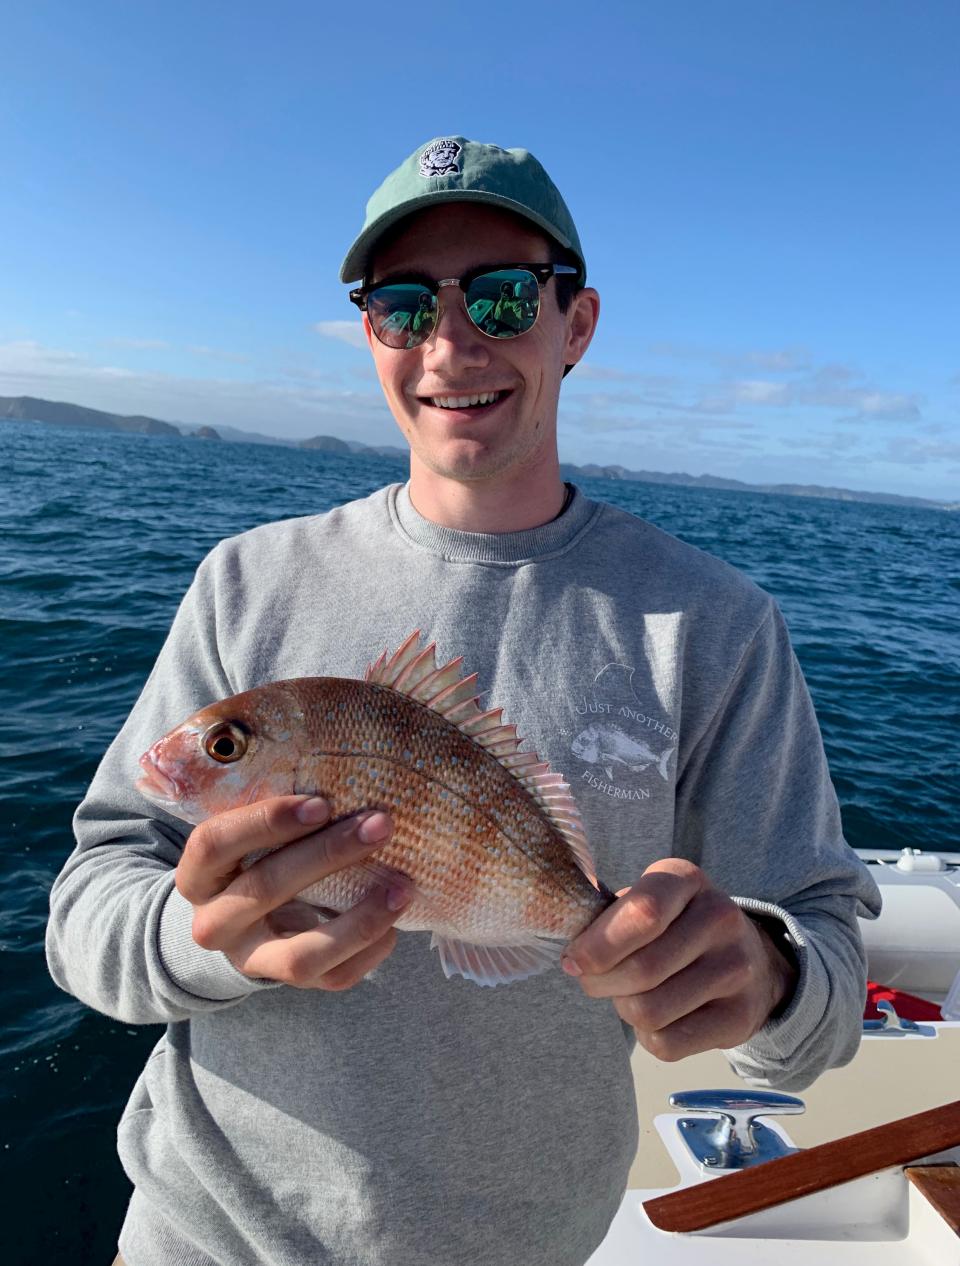 Oscar Halliwell fishing in the Bay of Island, New Zealand. 